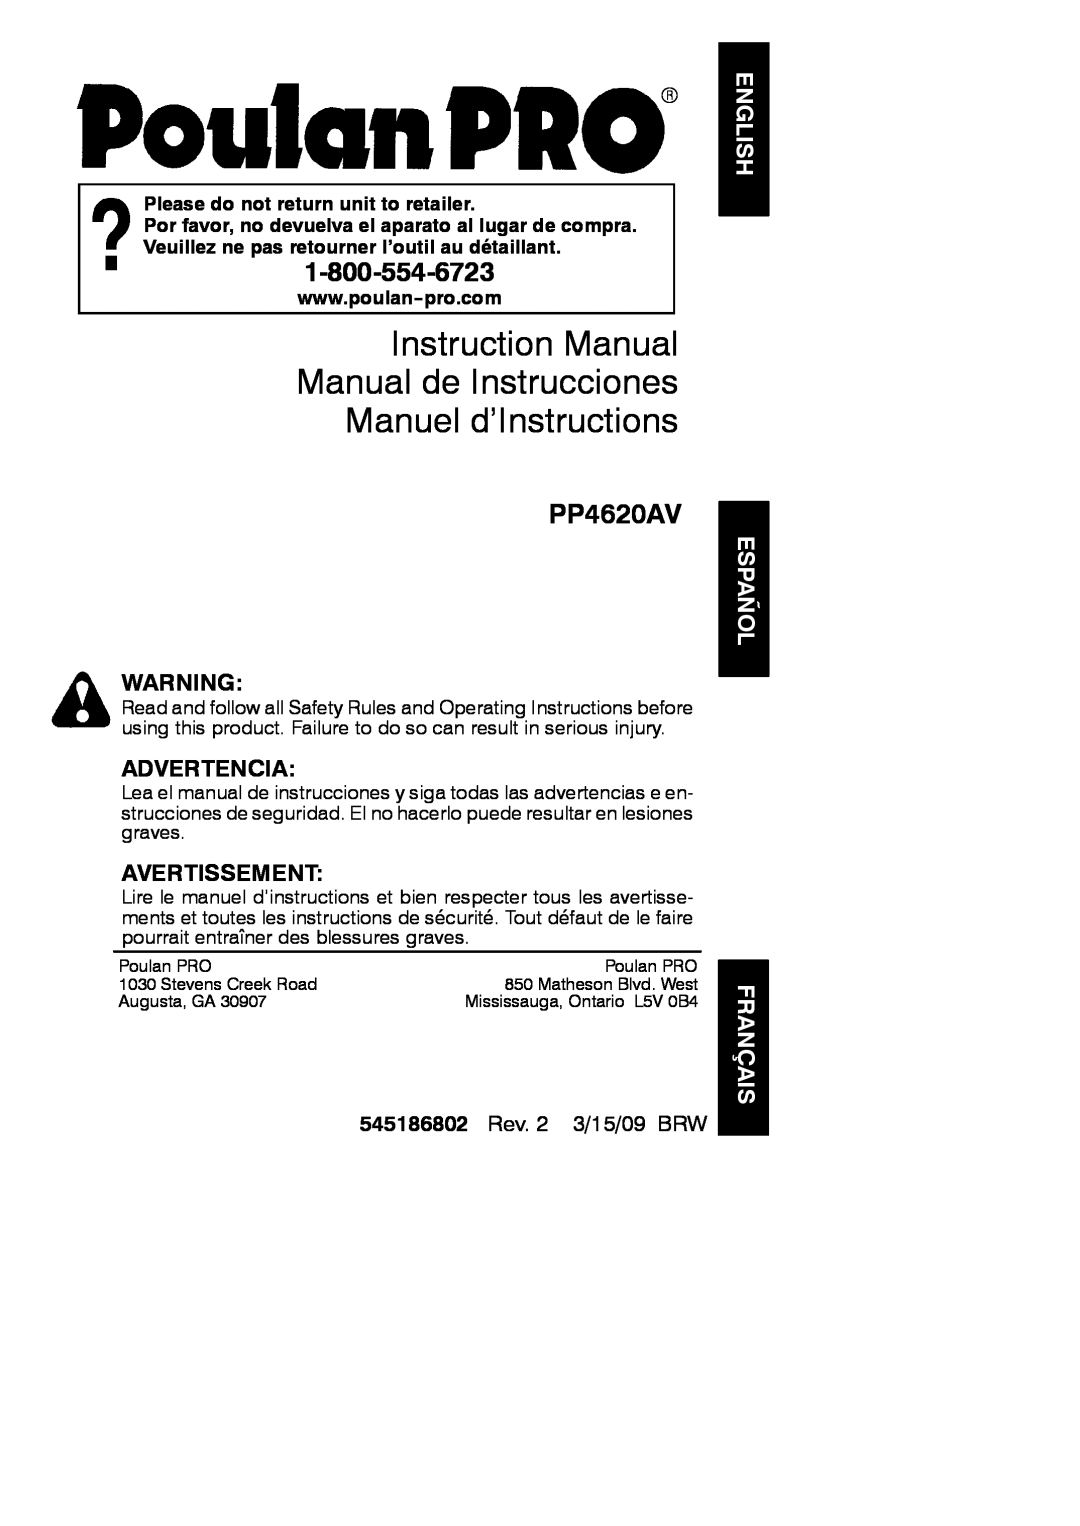 Poulan 545186802 instruction manual English Español Français, Instruction Manual Manual de Instrucciones, 1-800-554-6723 